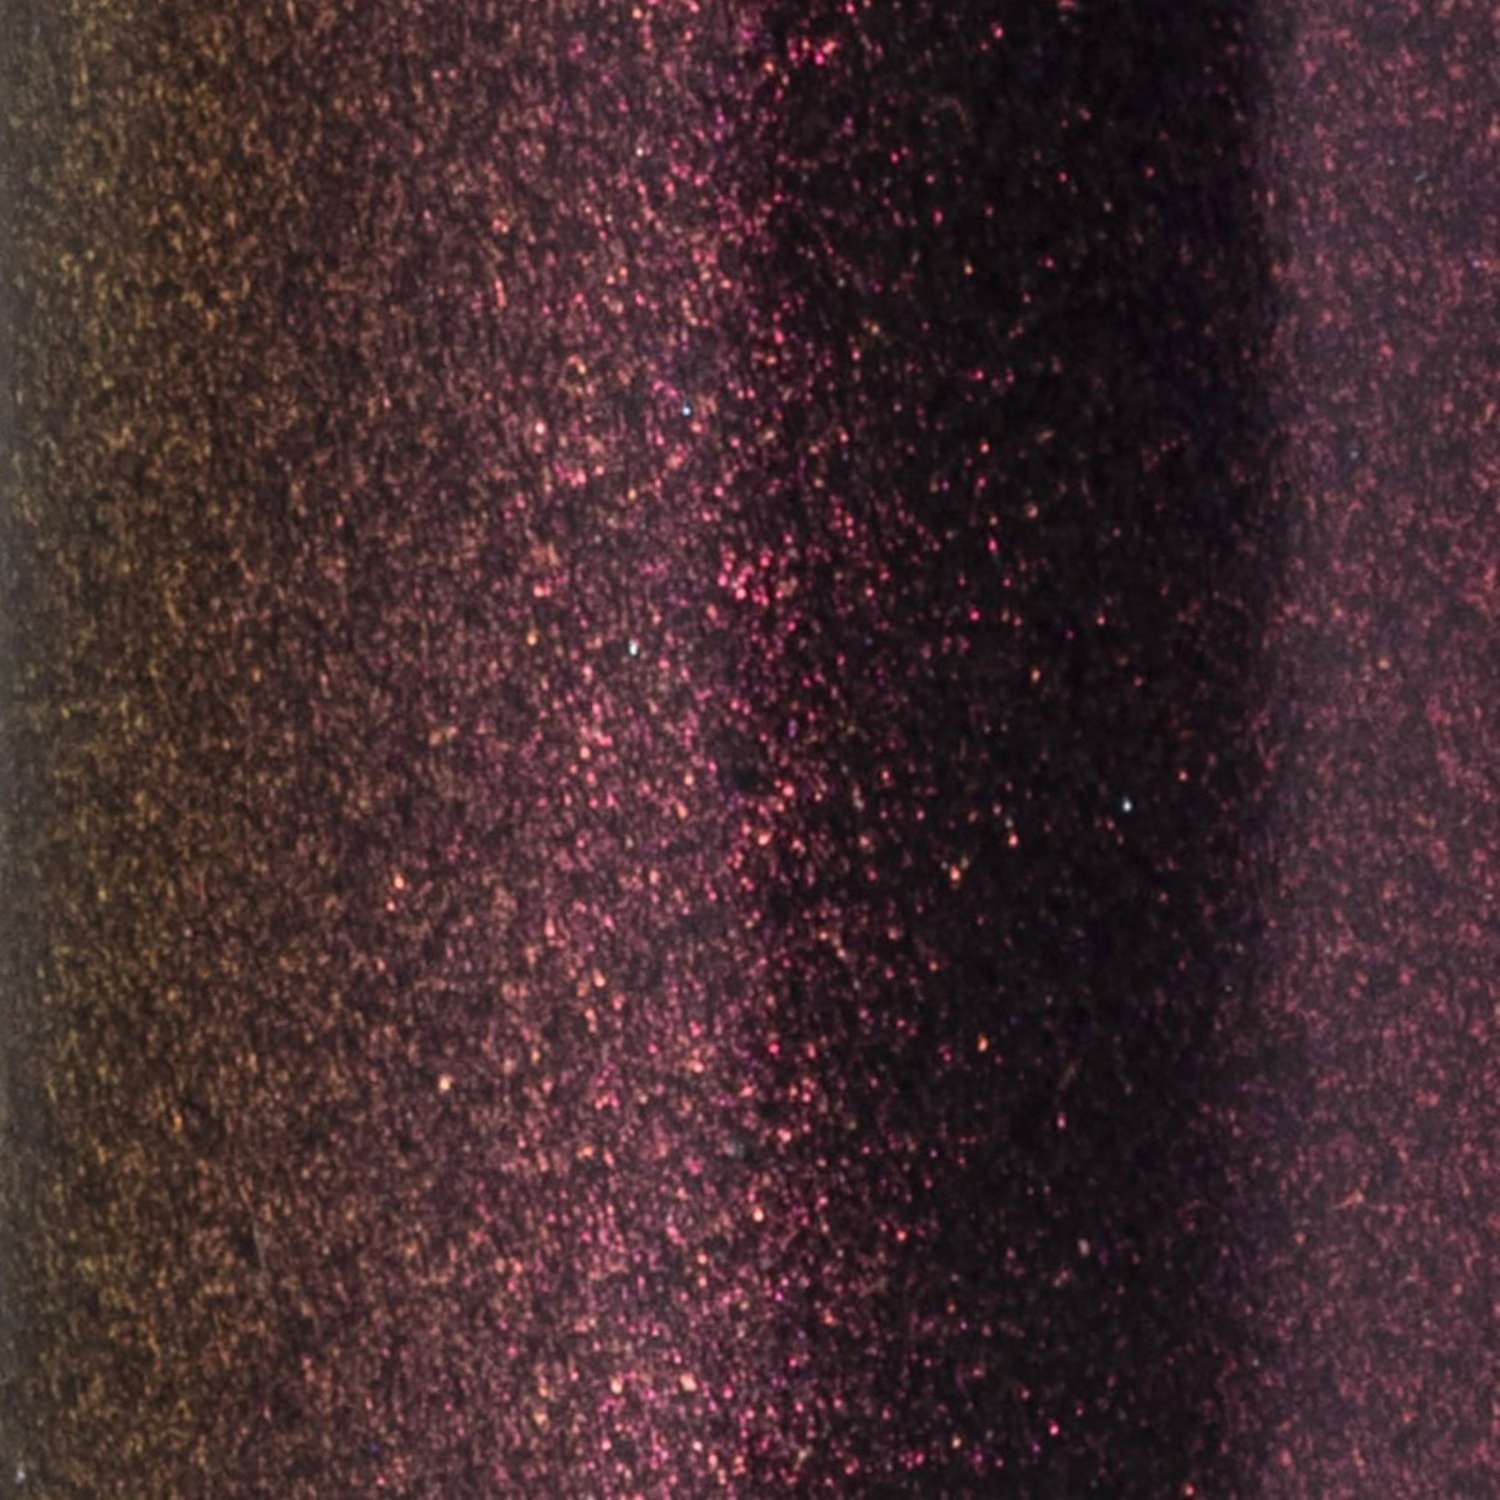 Rust-Oleum Imagine 4-Pack Gloss Champagne Pink Spray Paint (NET WT